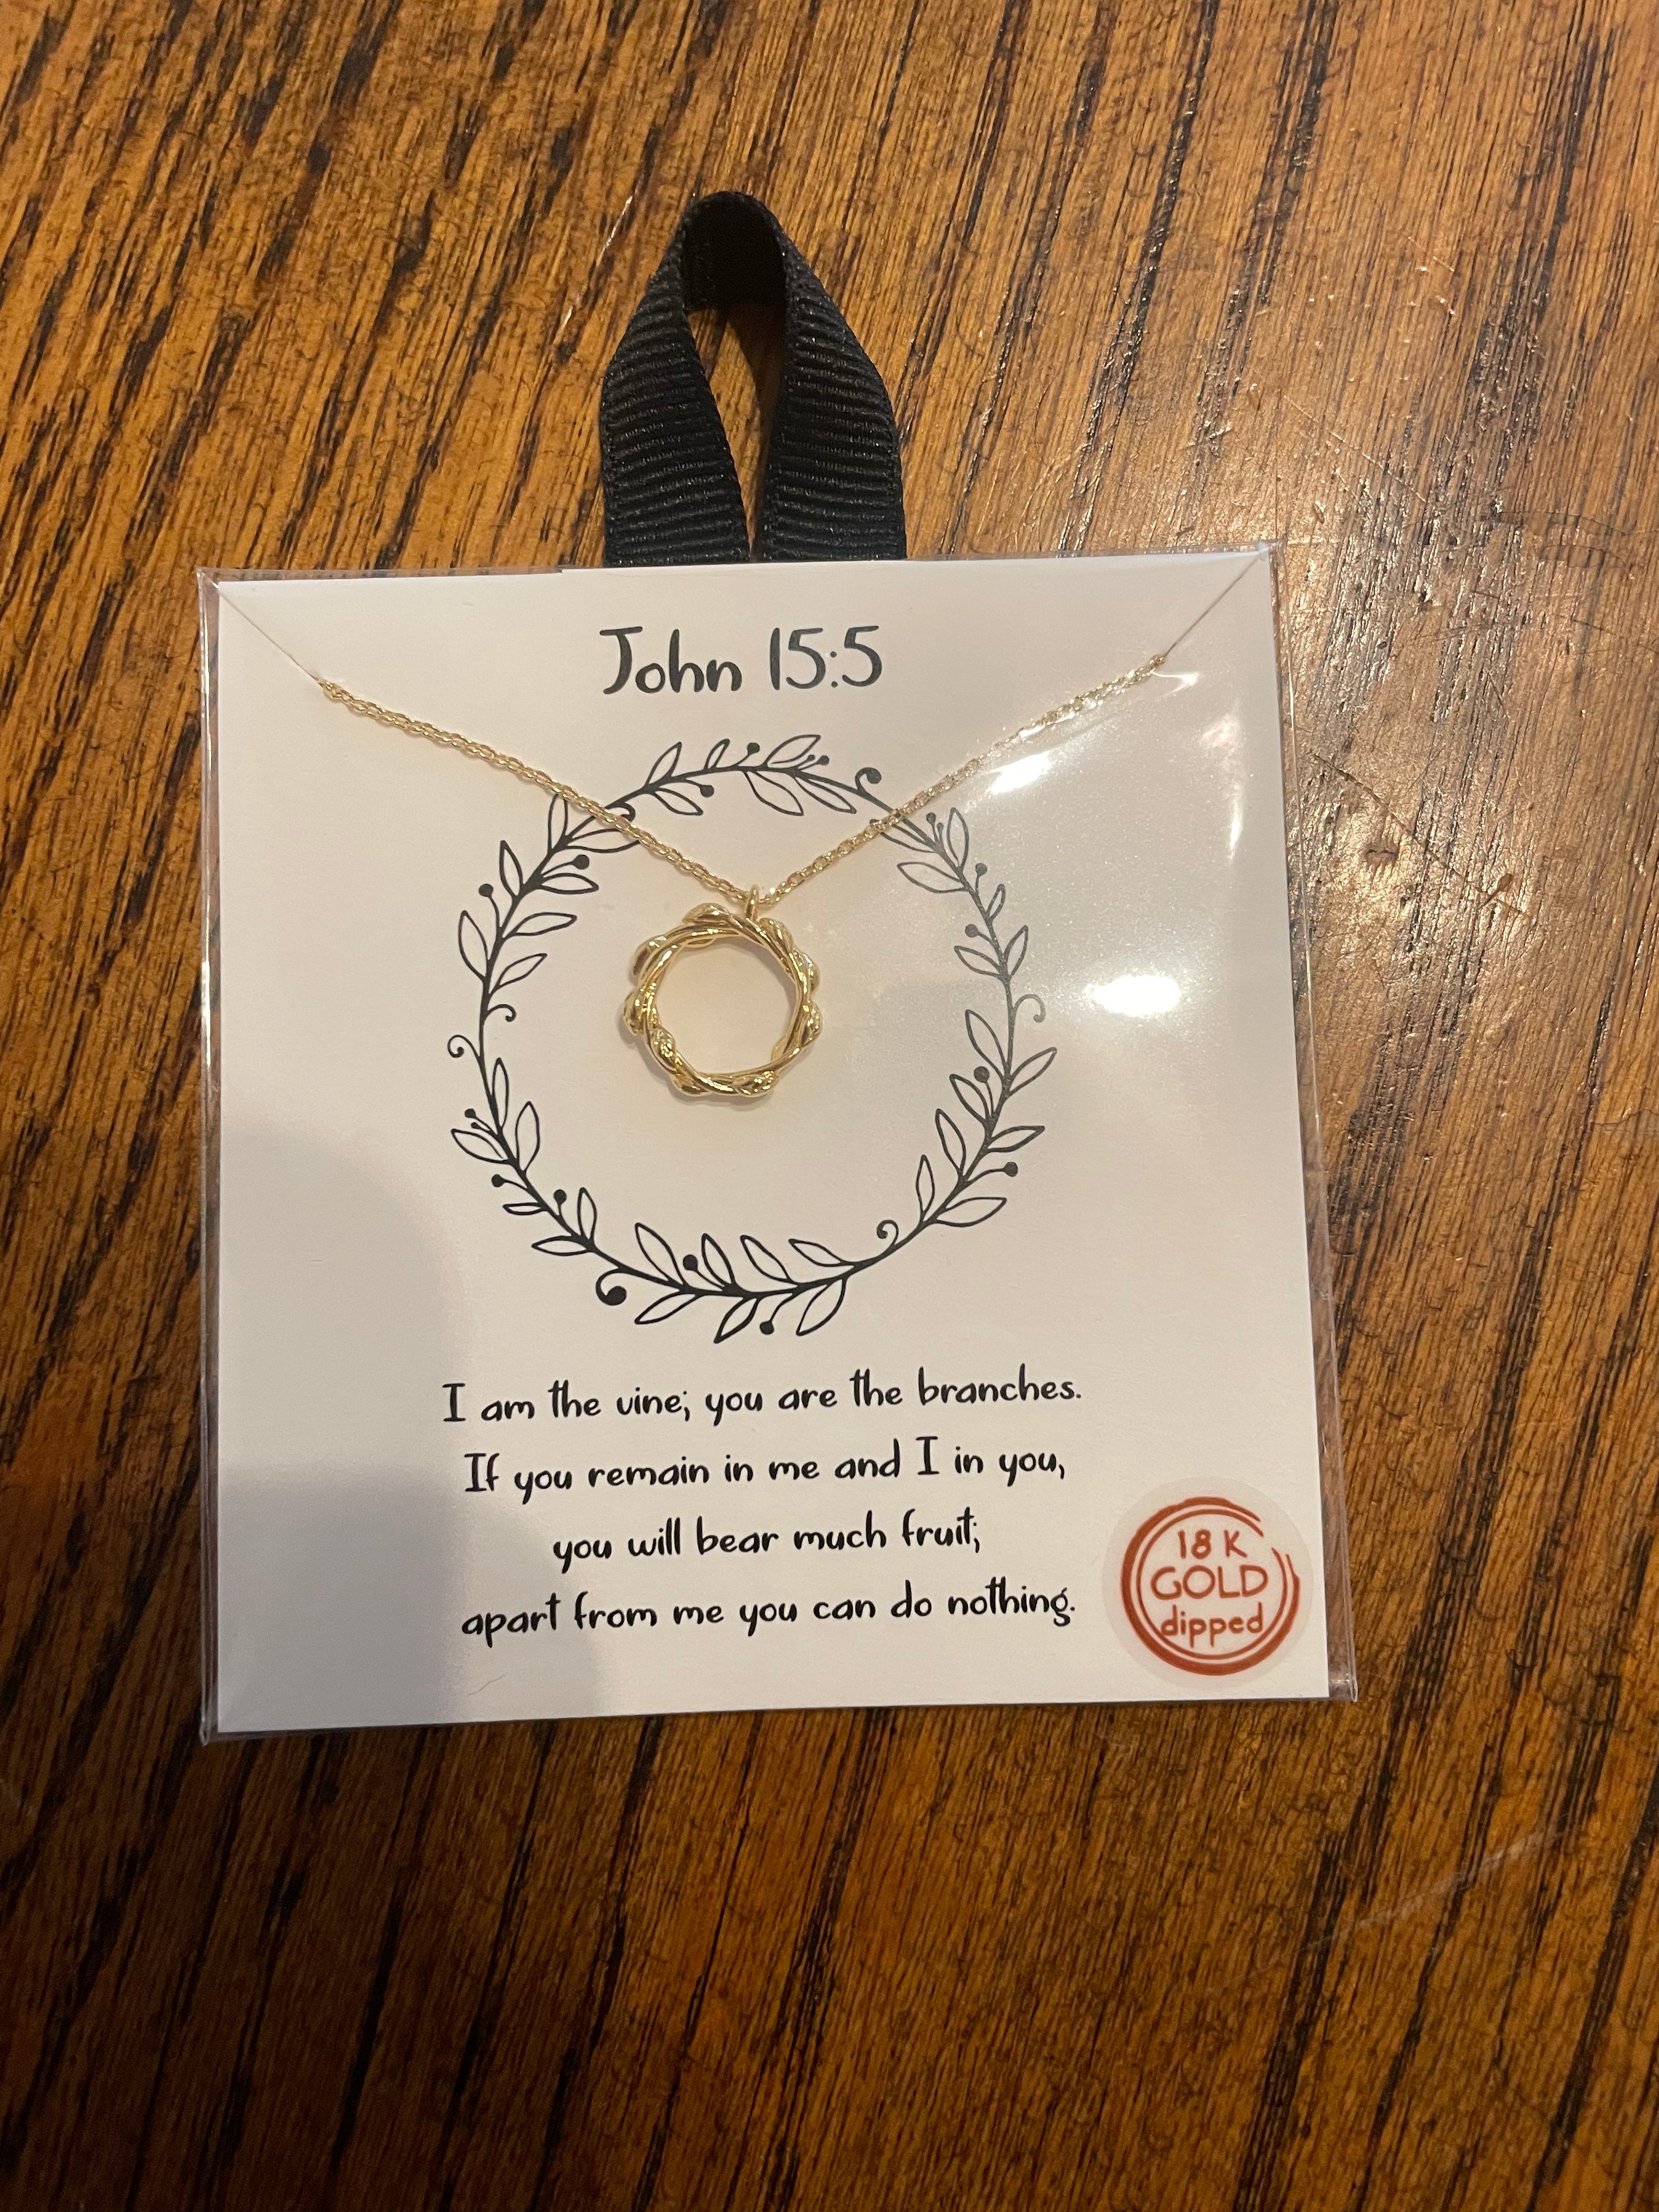 John 15.5 necklace